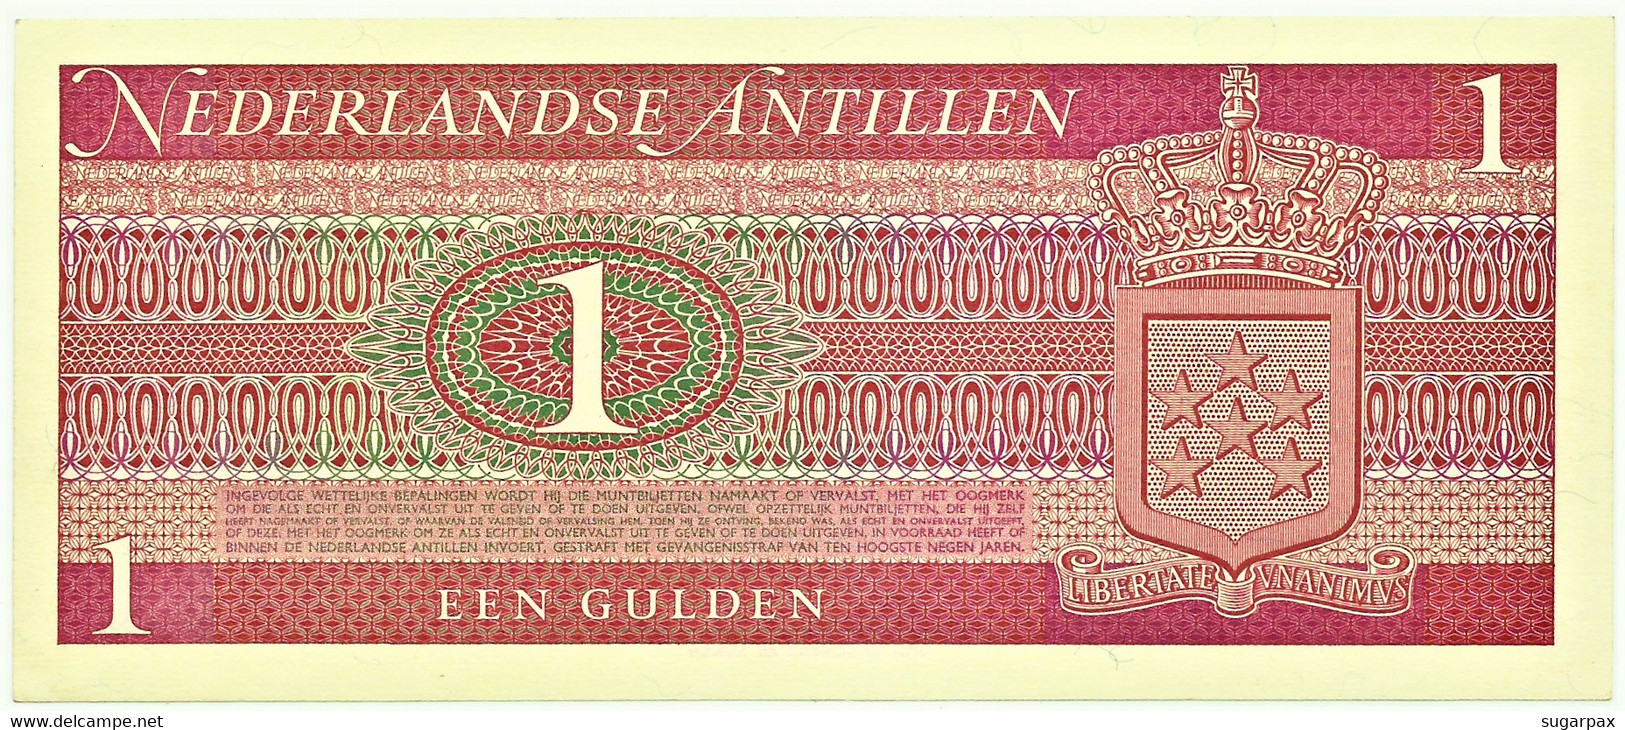 Netherlands Antilles - 1 Gulden - 08.09.1970 - Pick 20 - Unc. - Prefix D - Other - America